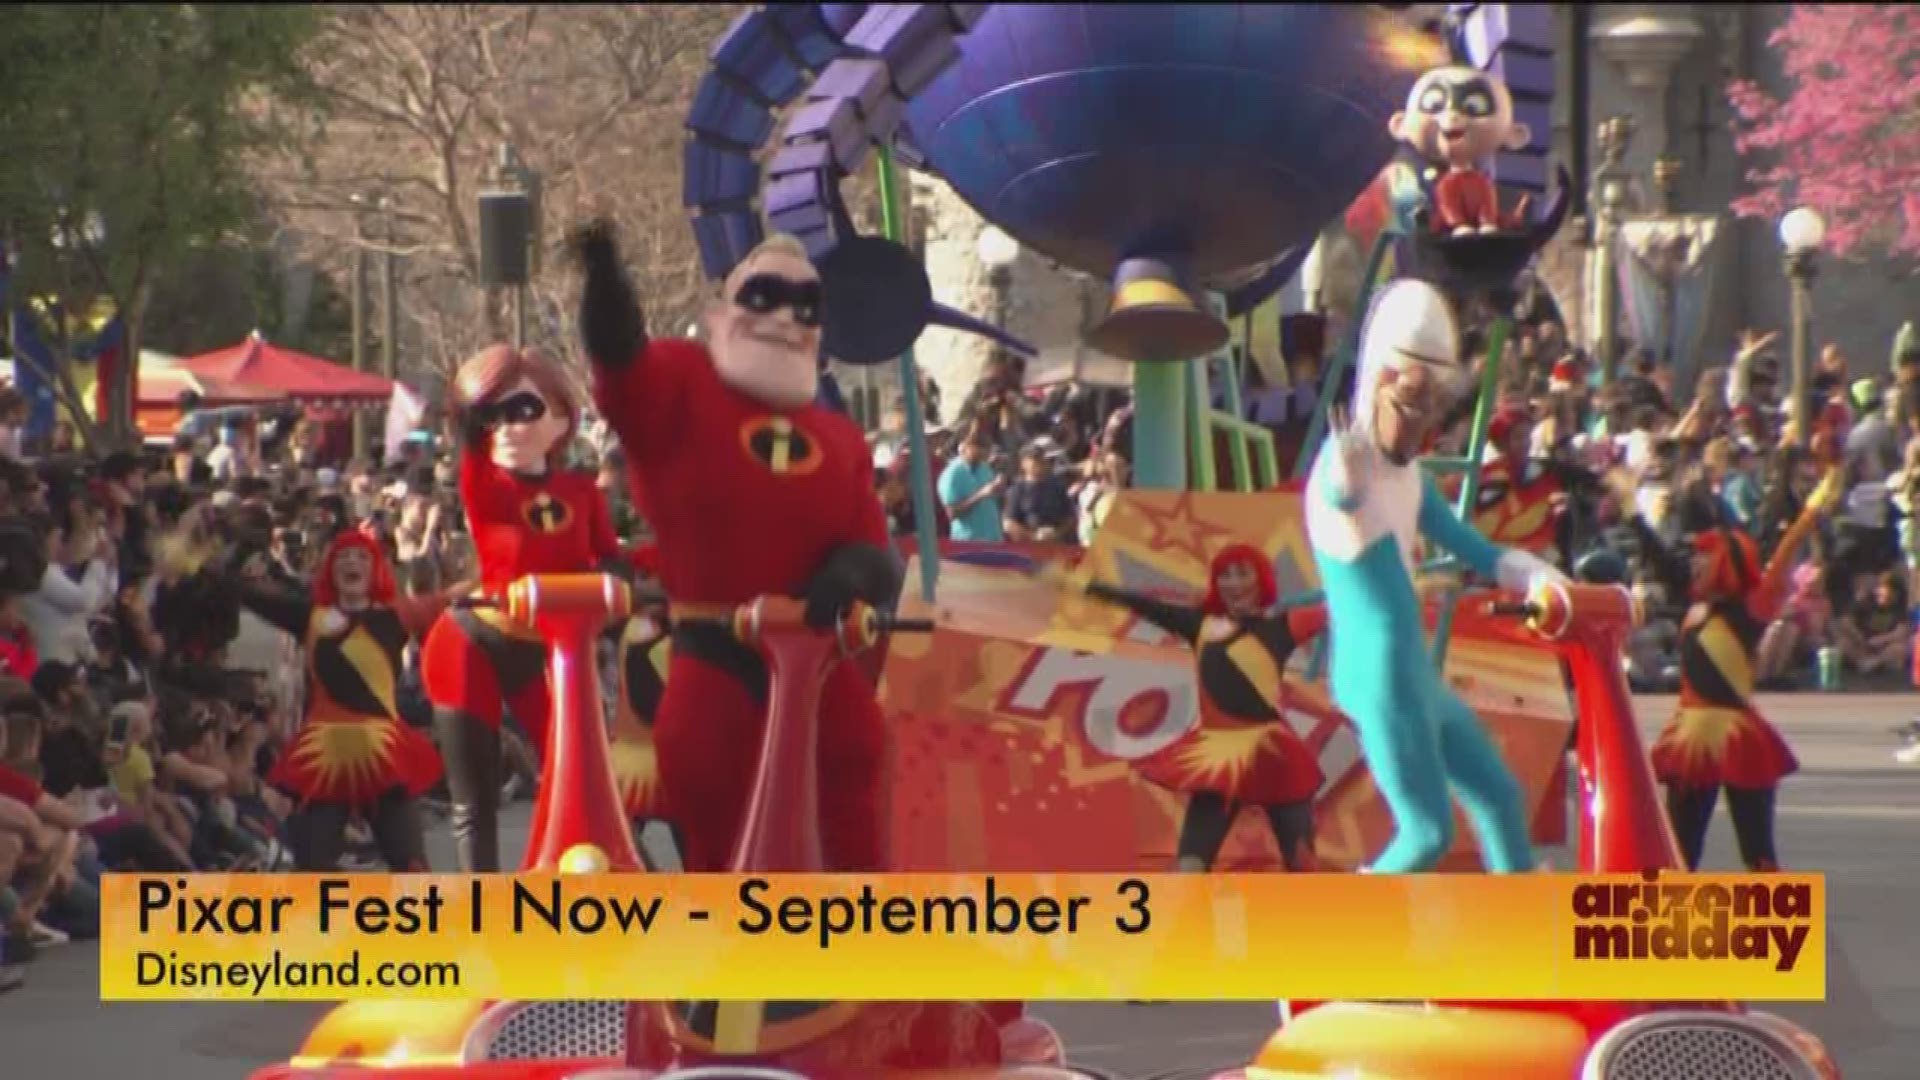 Disney Ambassador Alexa Garcia gives us a sneak peek at Pixar Fest happening now through Septment 3rd at Disneyland Resort